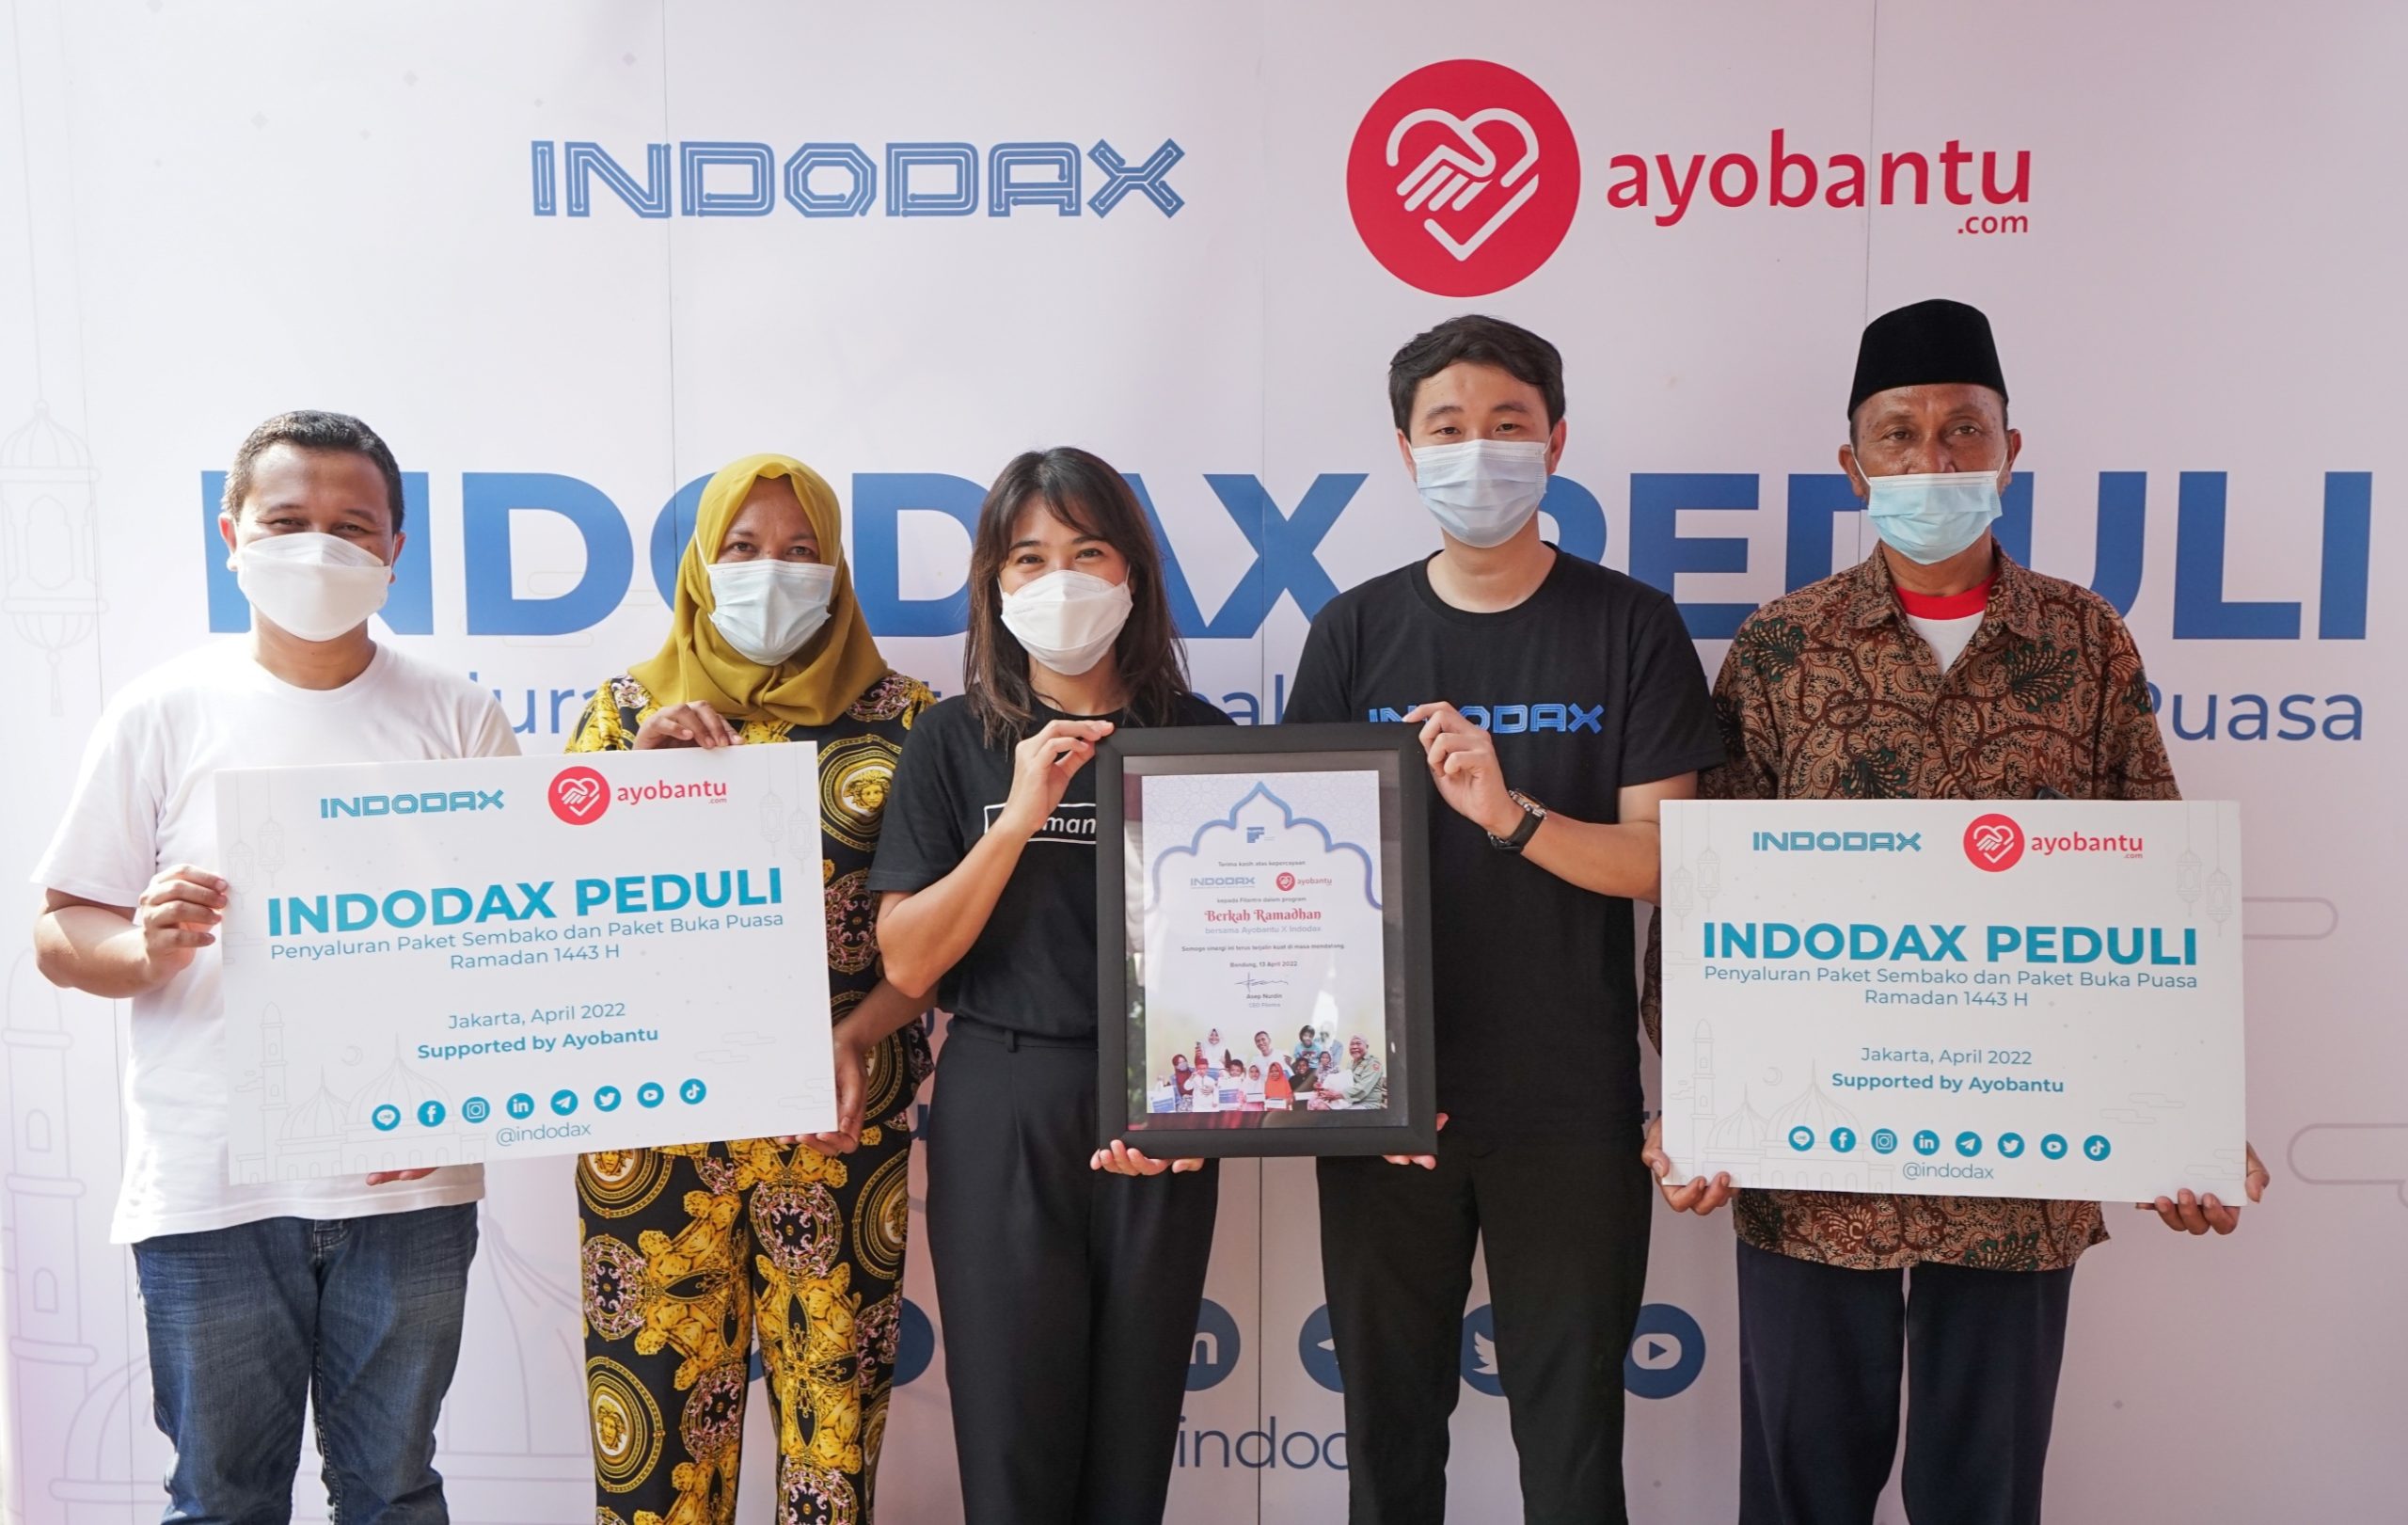 Indodax peduli gandeng Ayobantu.com. (Foto: Ist) ﻿